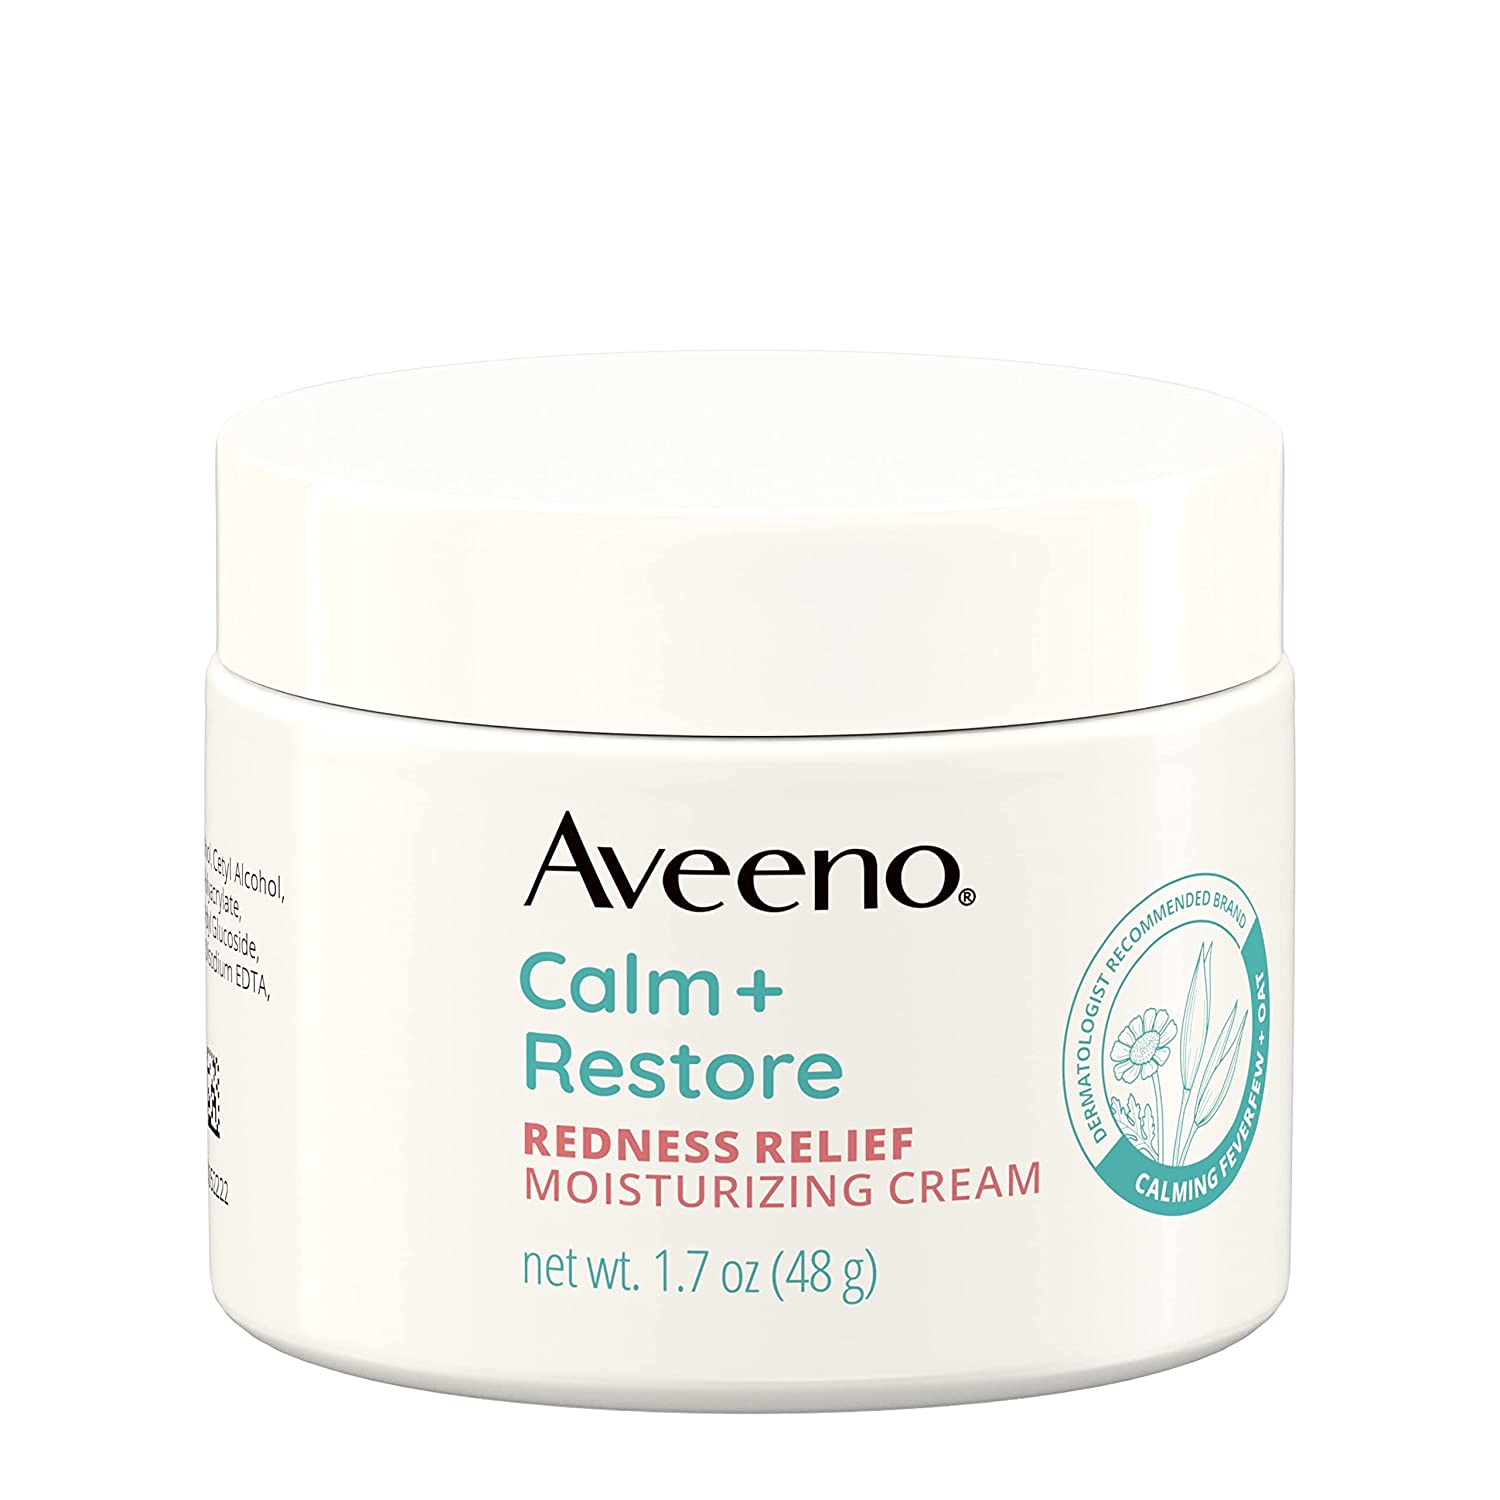 aveeno calm and restore moisturizing cream jar on a white background